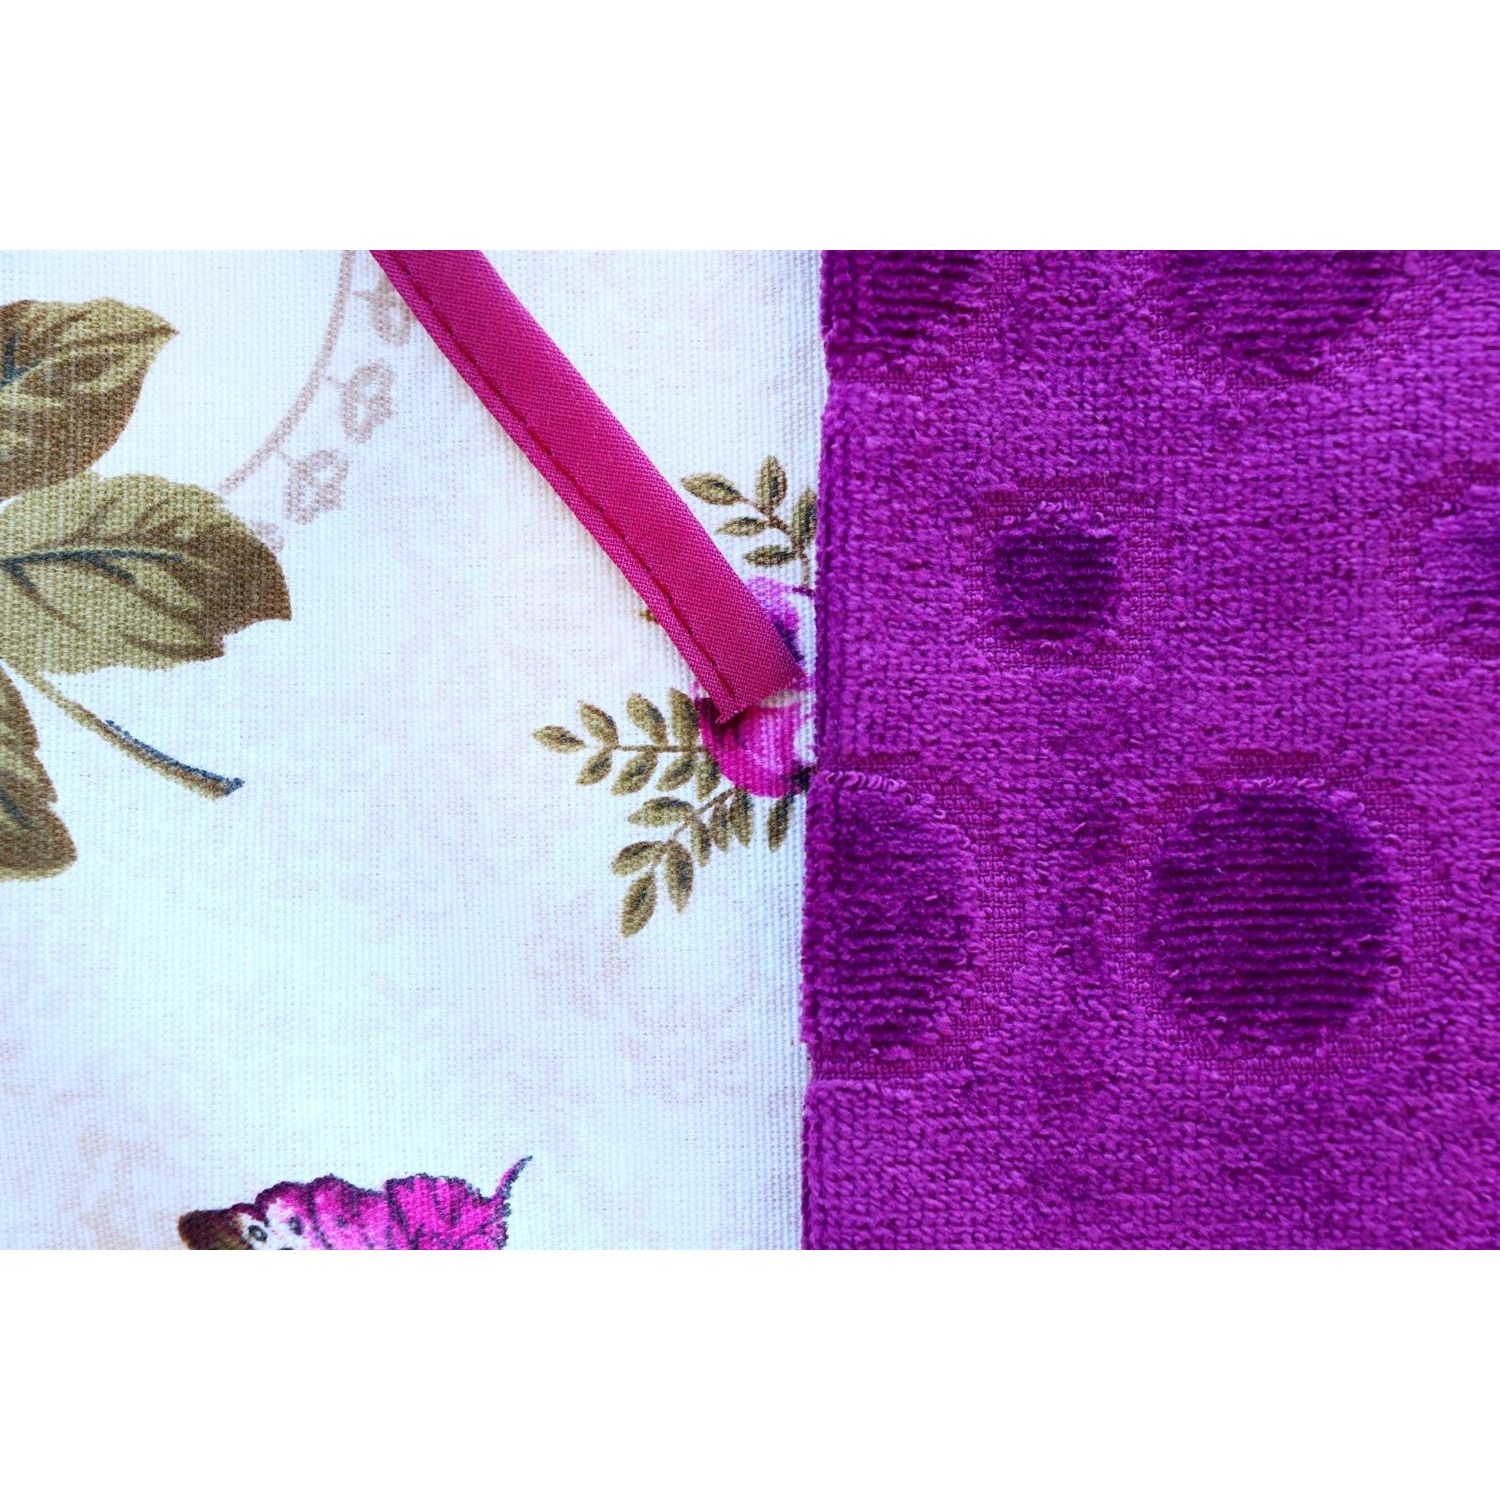 Набор для кухни IzziHome Flowers фартук + полотенце фиолетовое (607768) - фото 3